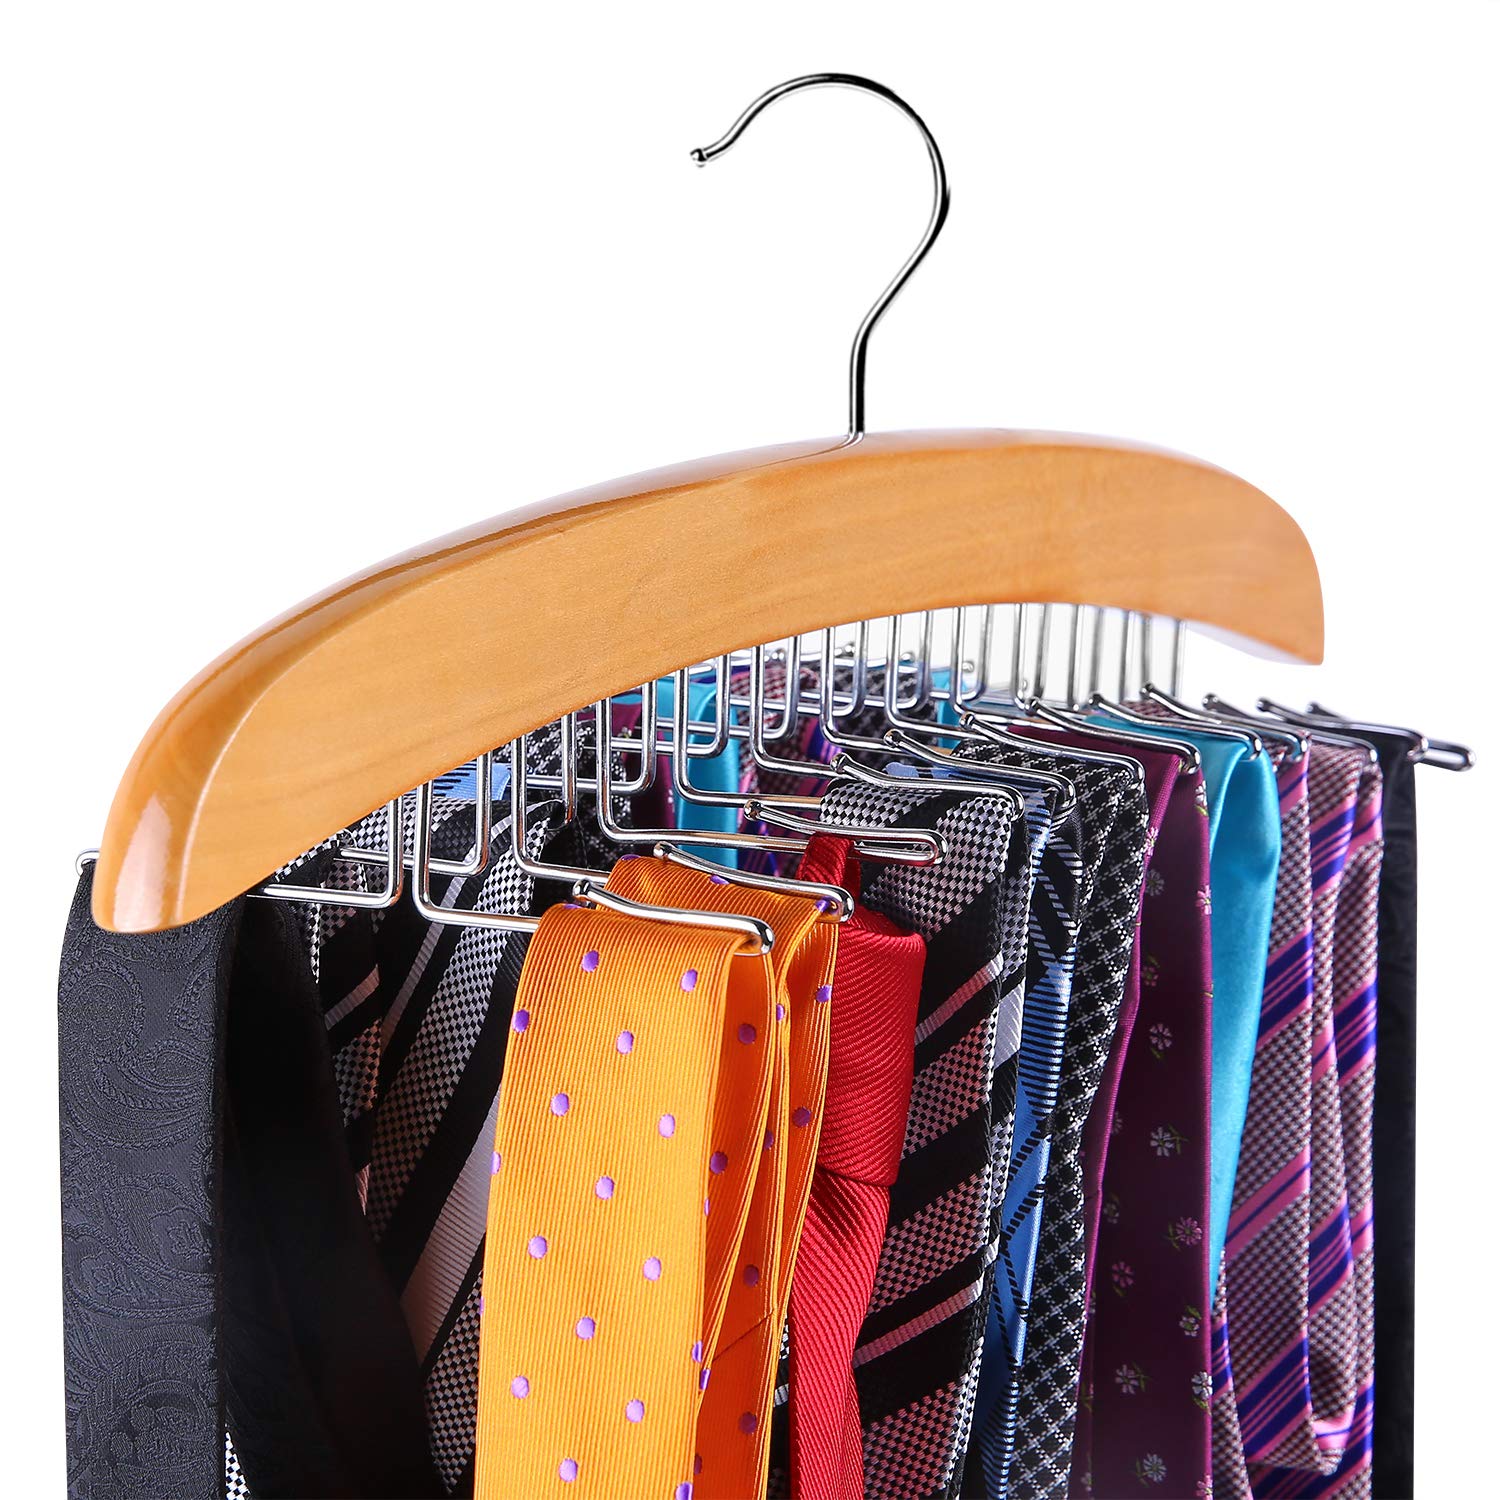 Ohuhu Tie Rack, Wooden Tie Organizer, 24 Tie Hanger Hook Storage Rack